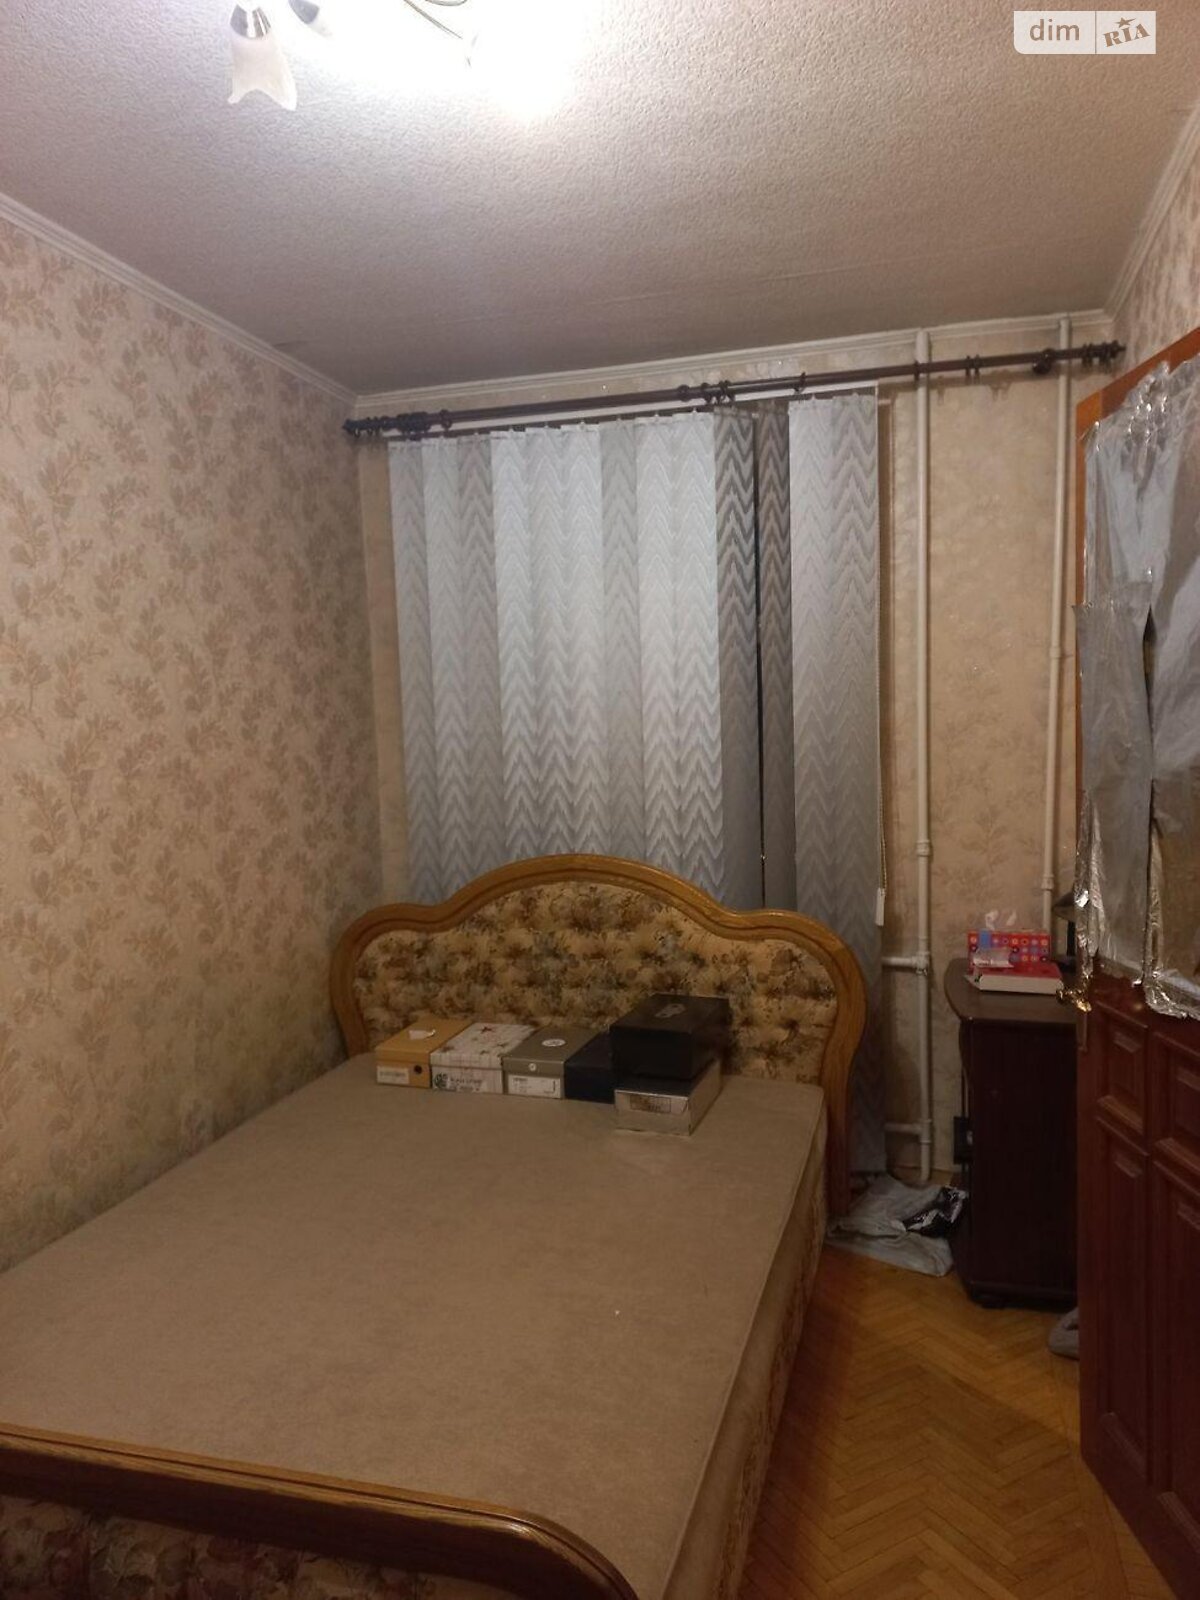 Продаж двокімнатної квартири в Харкові, на просп. Науки 41/43, район Павлове Поле фото 1